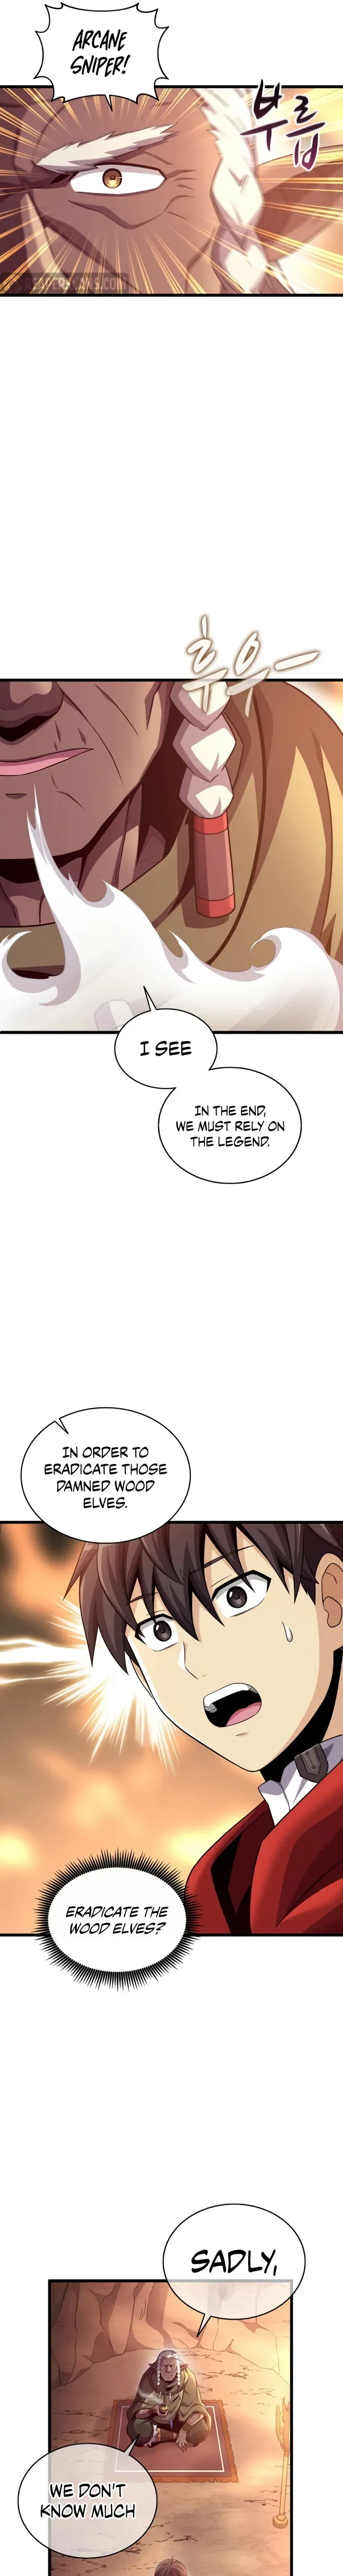 Read Manga Arcane Sniper - Chapter 64